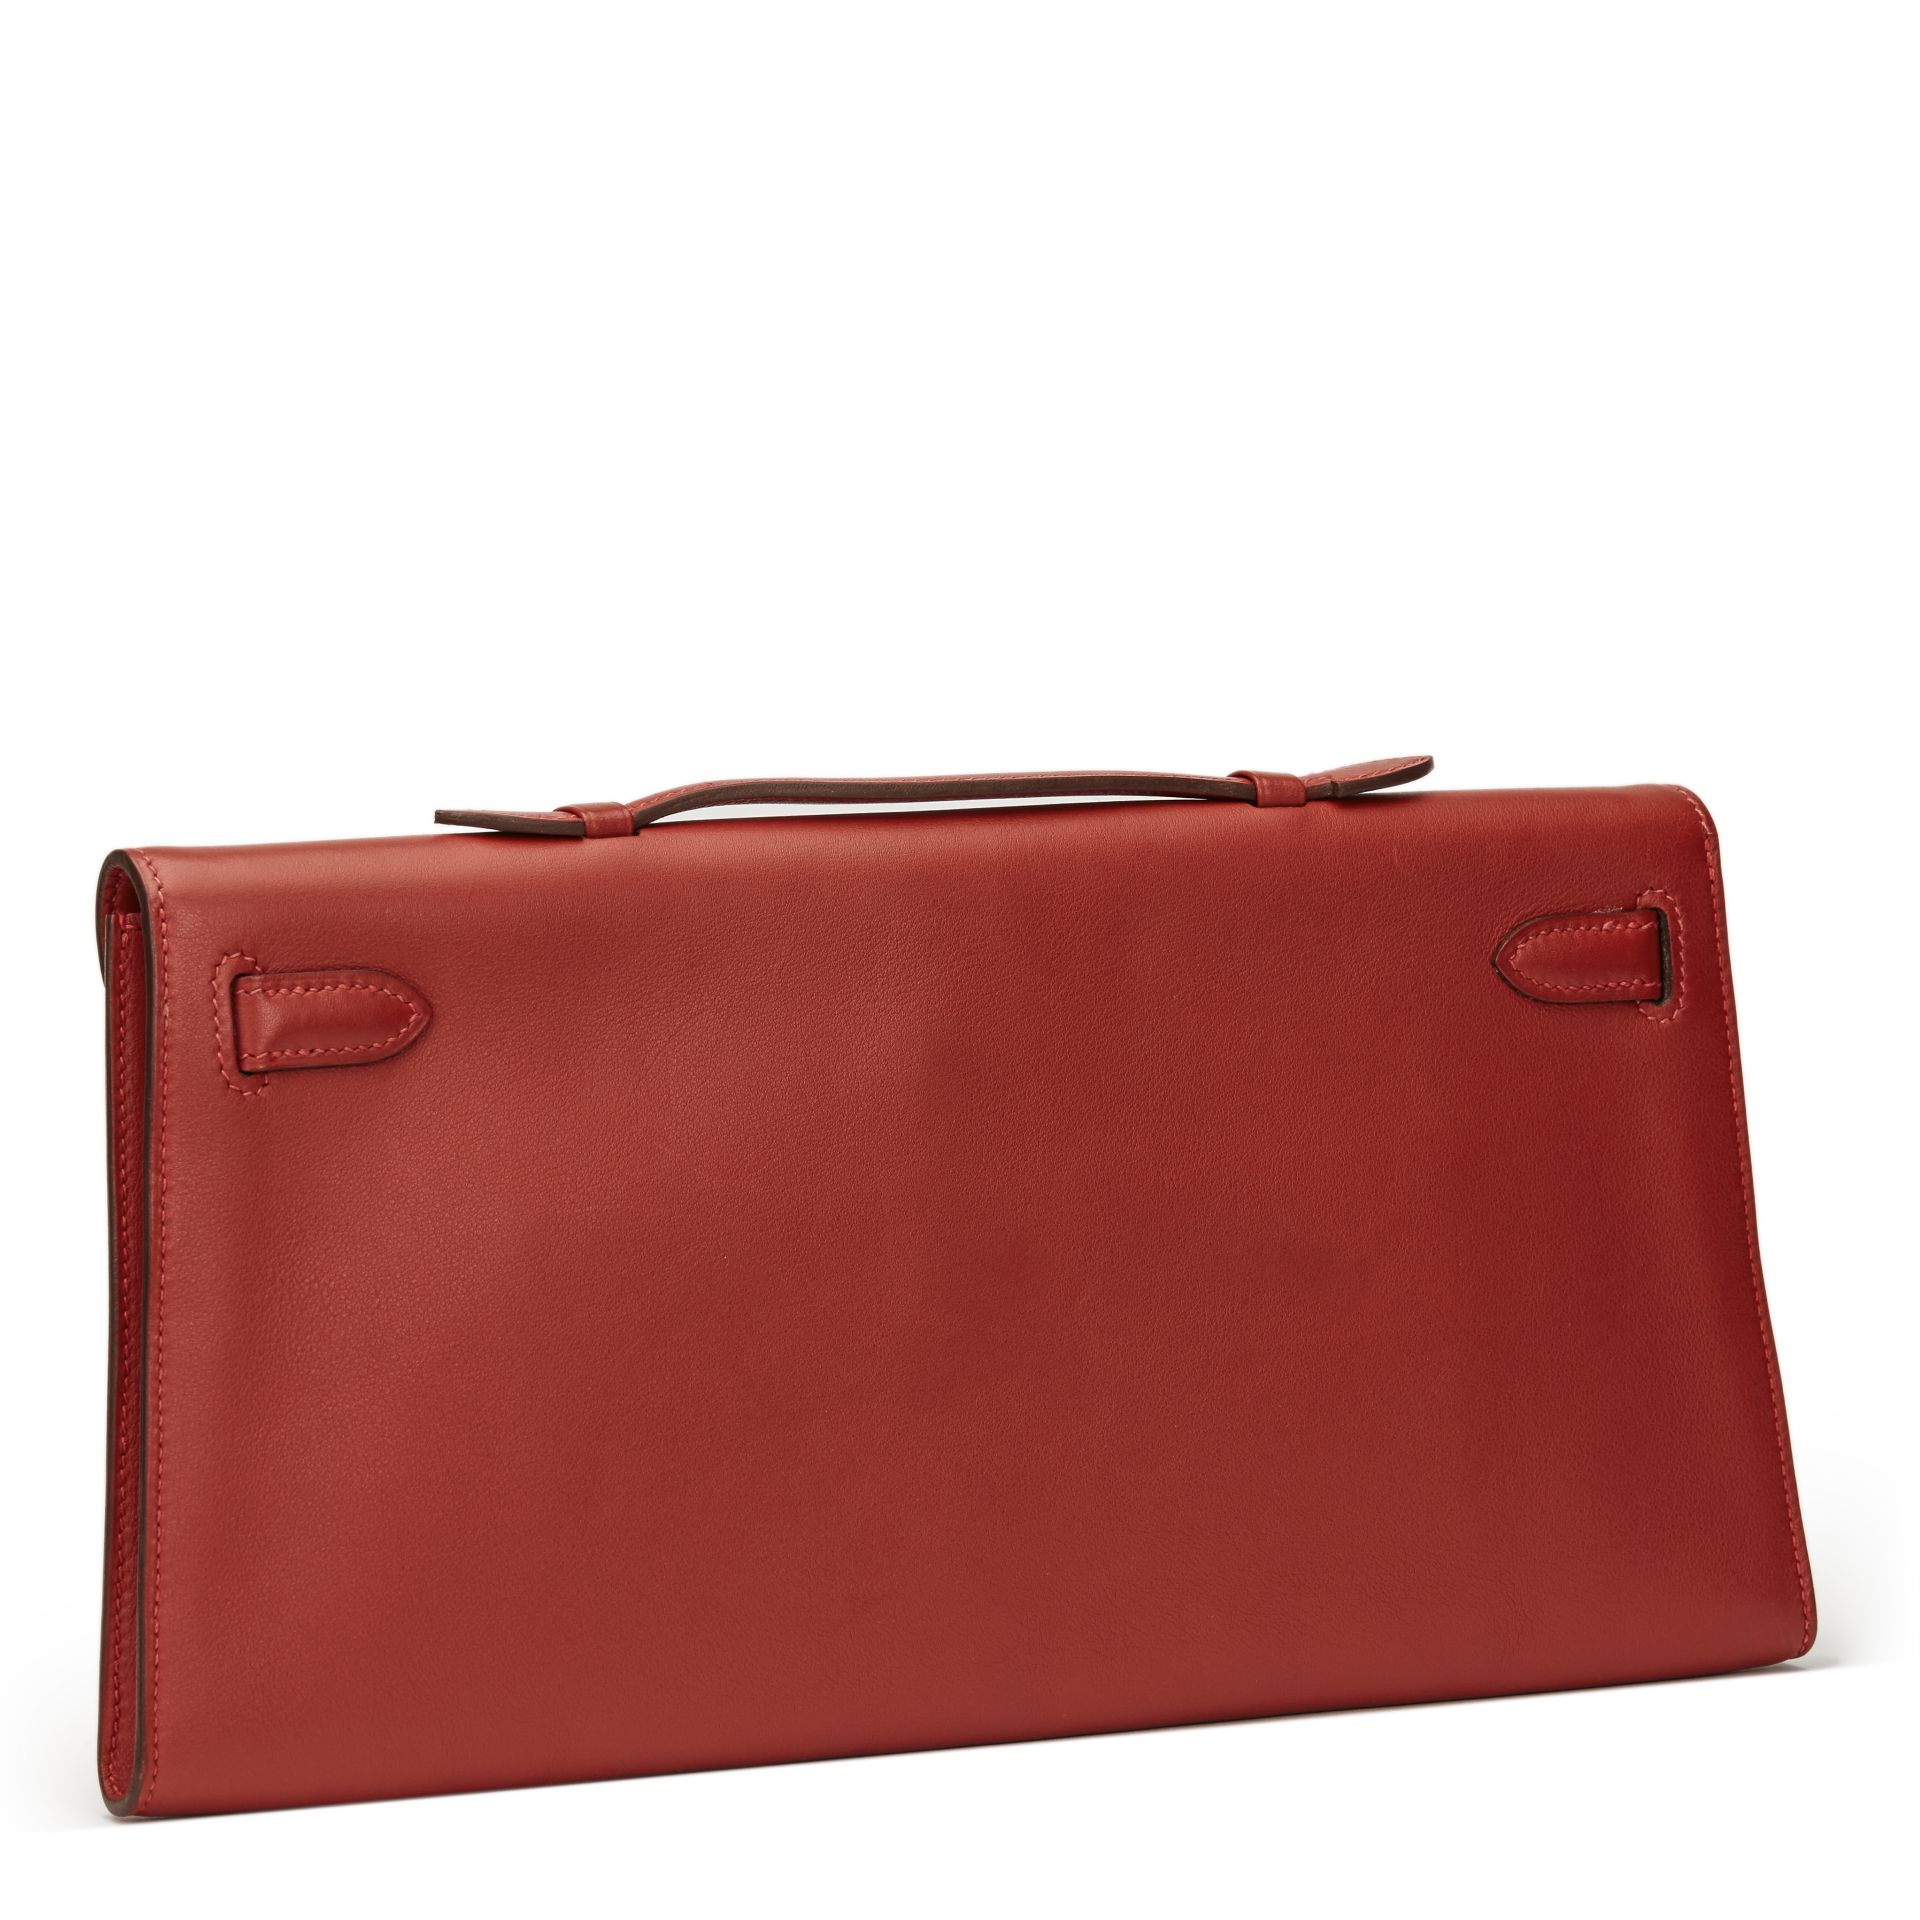 Rouge Garance Swift Leather Kelly Longue Clutch - Image 7 of 9